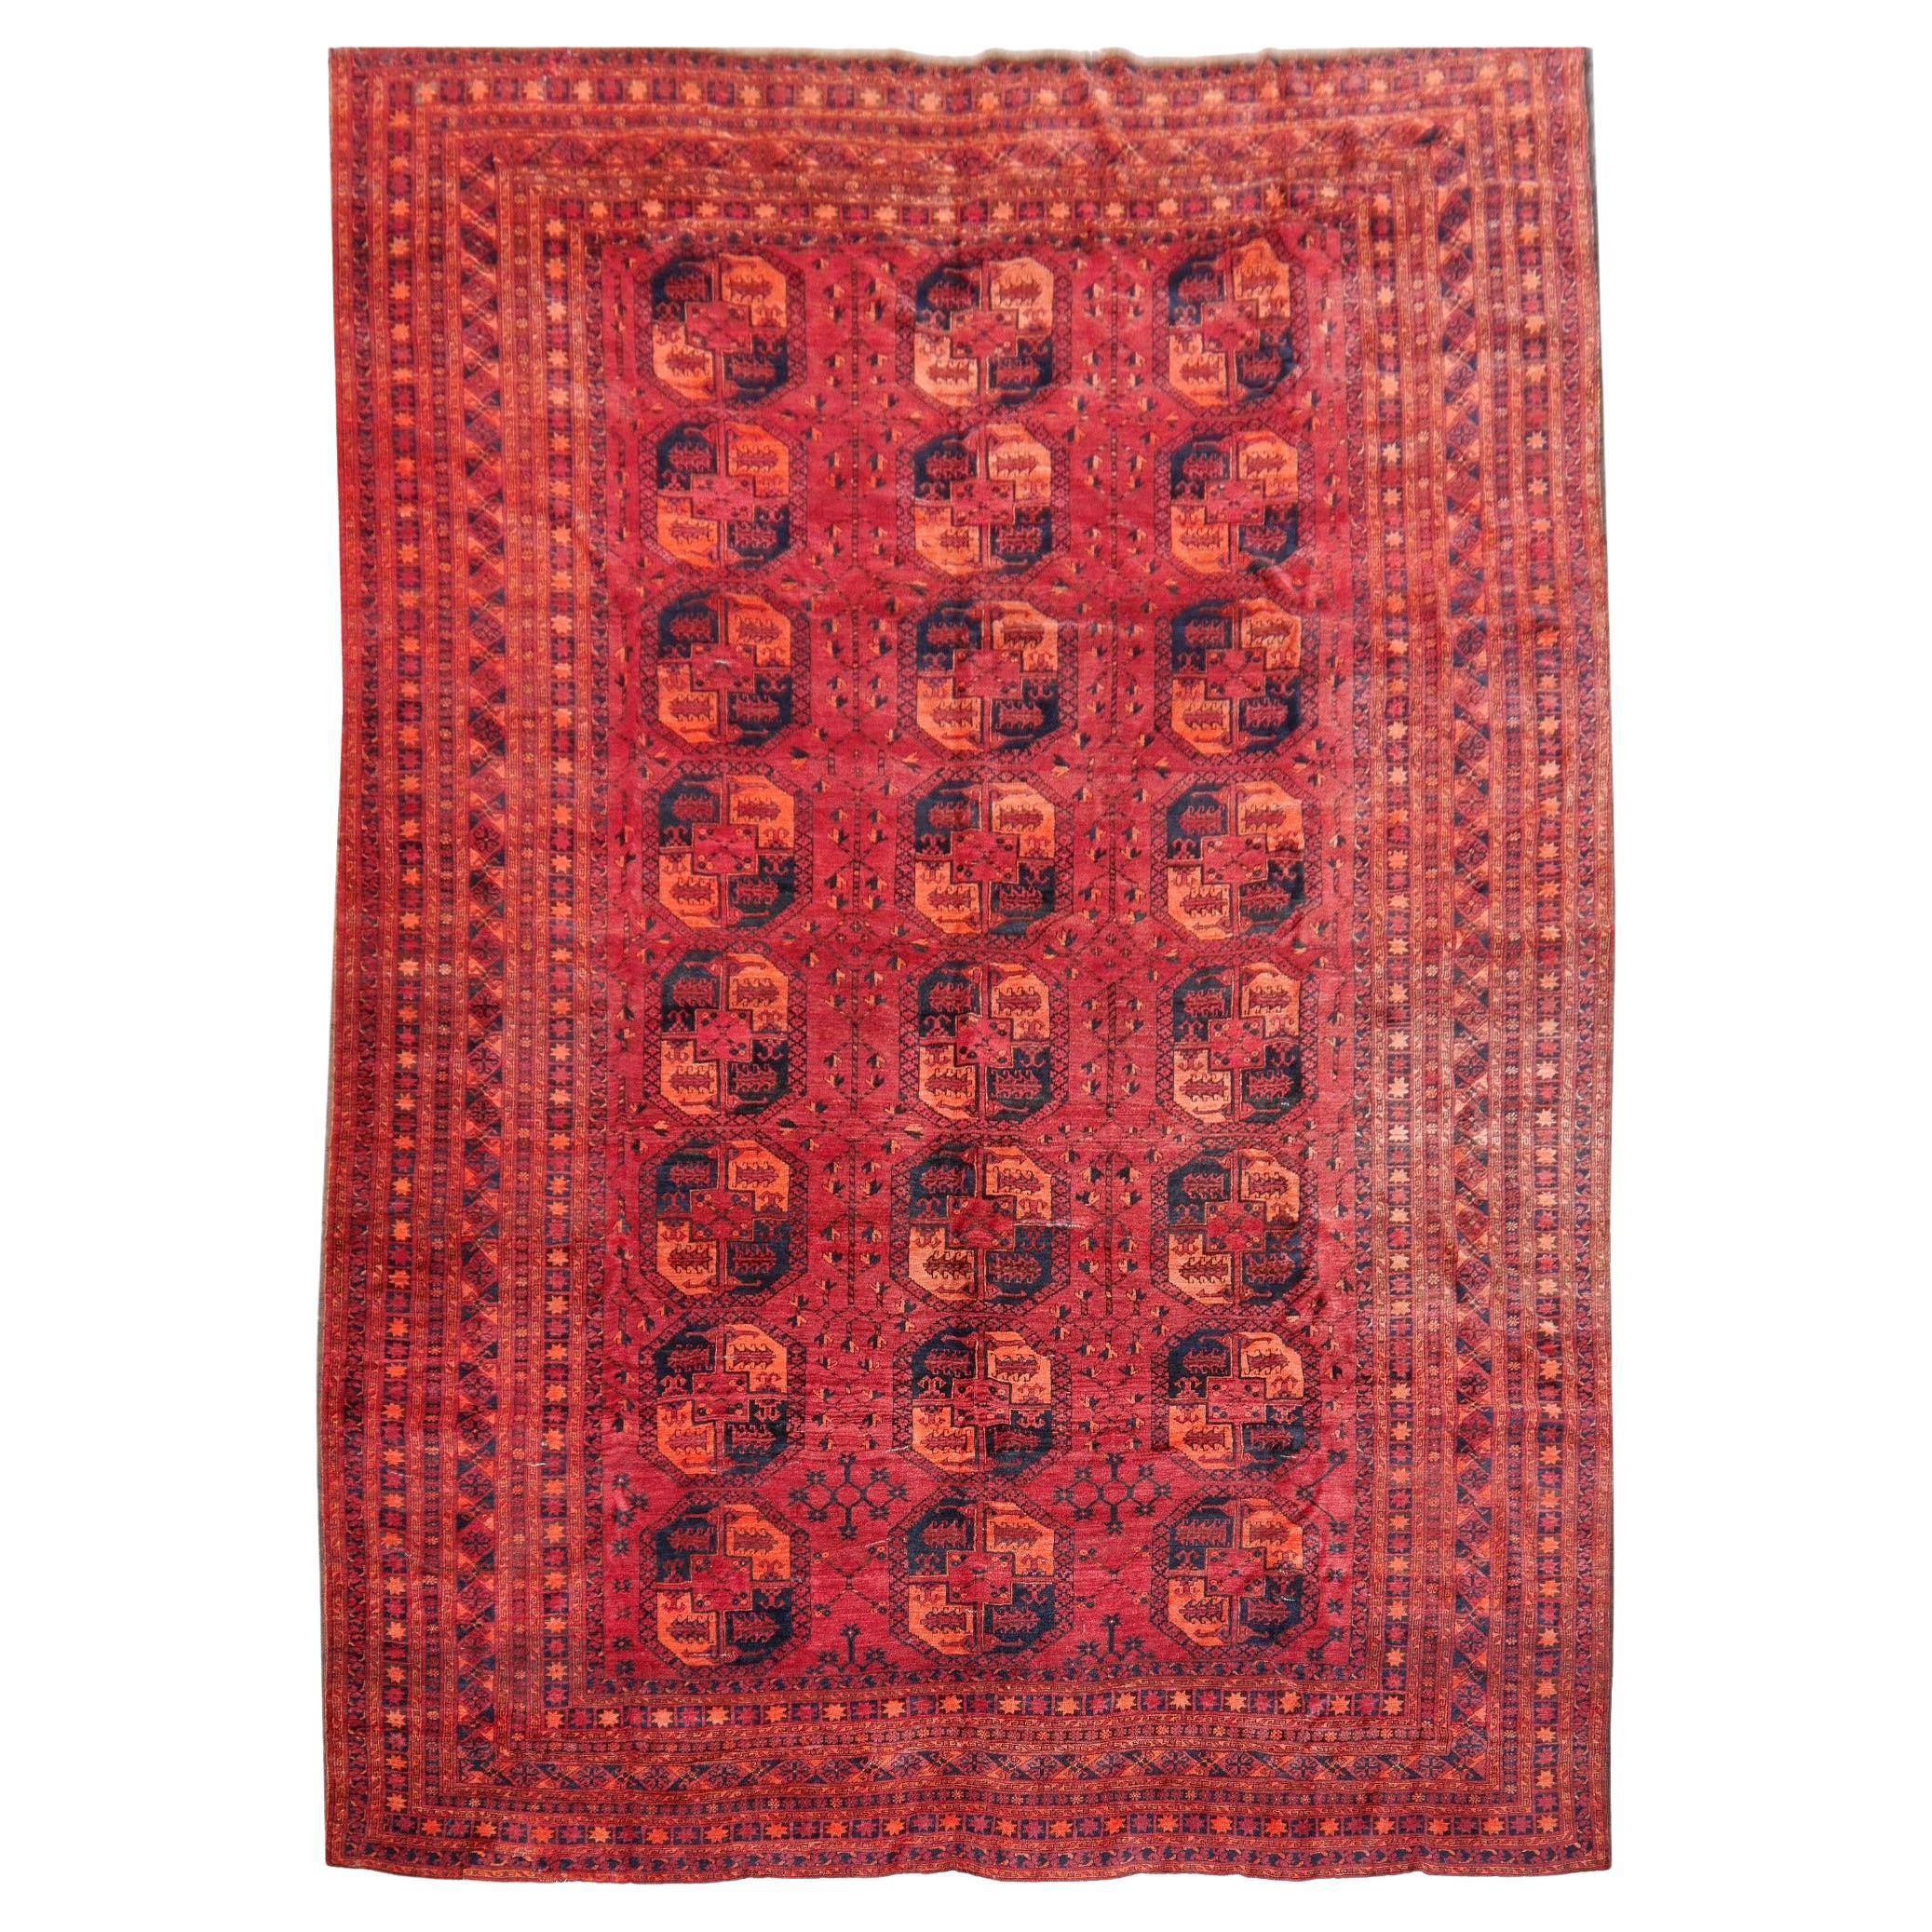 Ersari rug 11.2 x 15.5 ft oversized tribal Turkoman hand knotted antique carpet